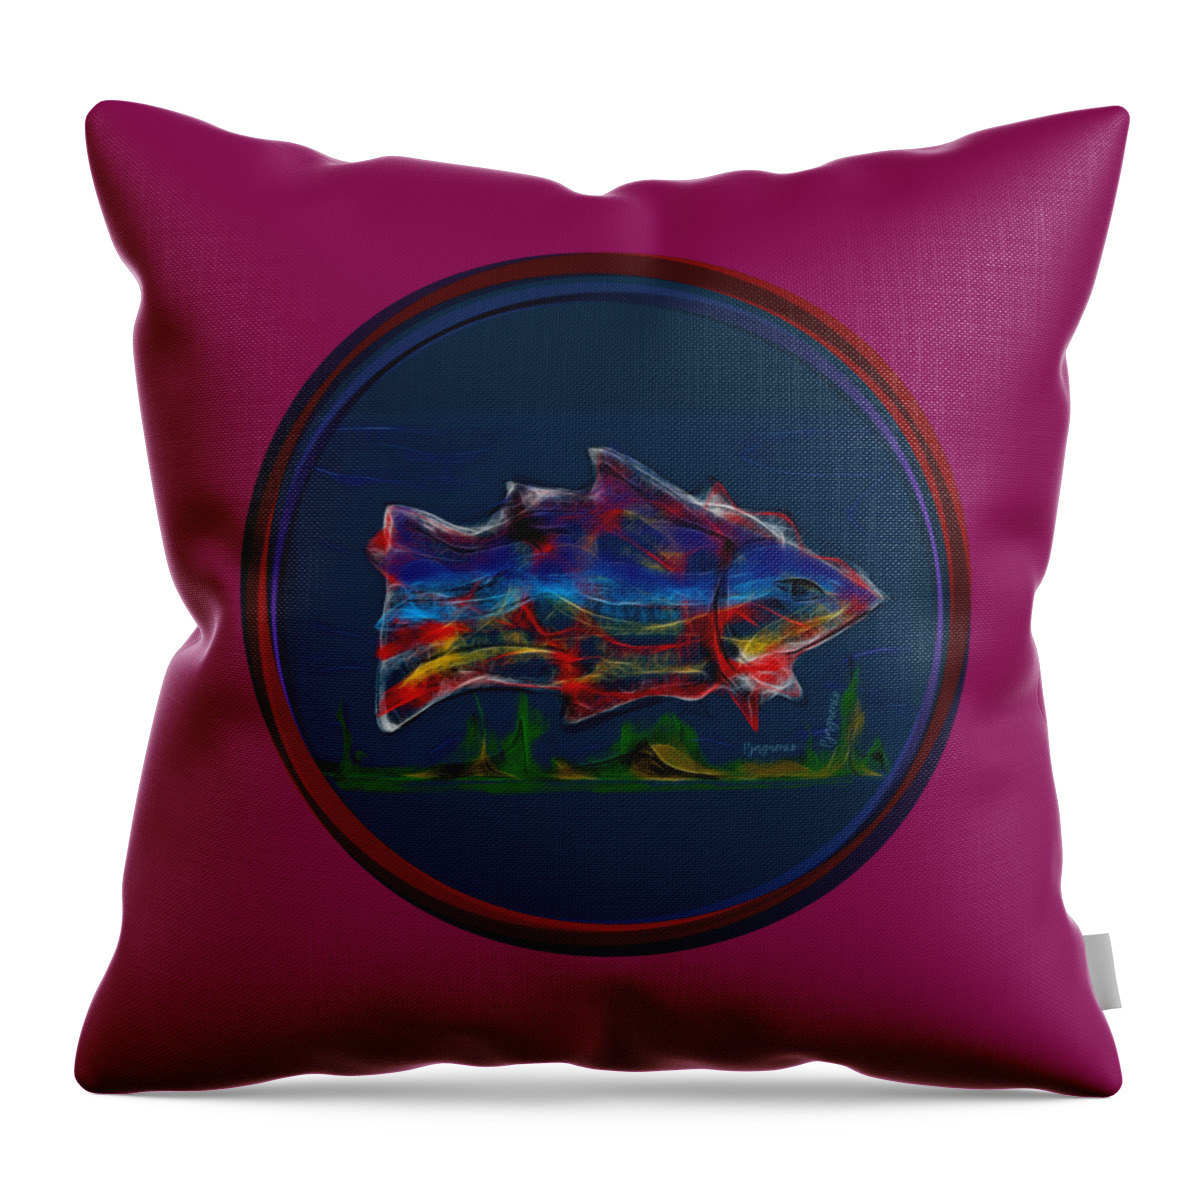 Queen Throw Pillow featuring the digital art Queen of lake by Ljev Rjadcenko